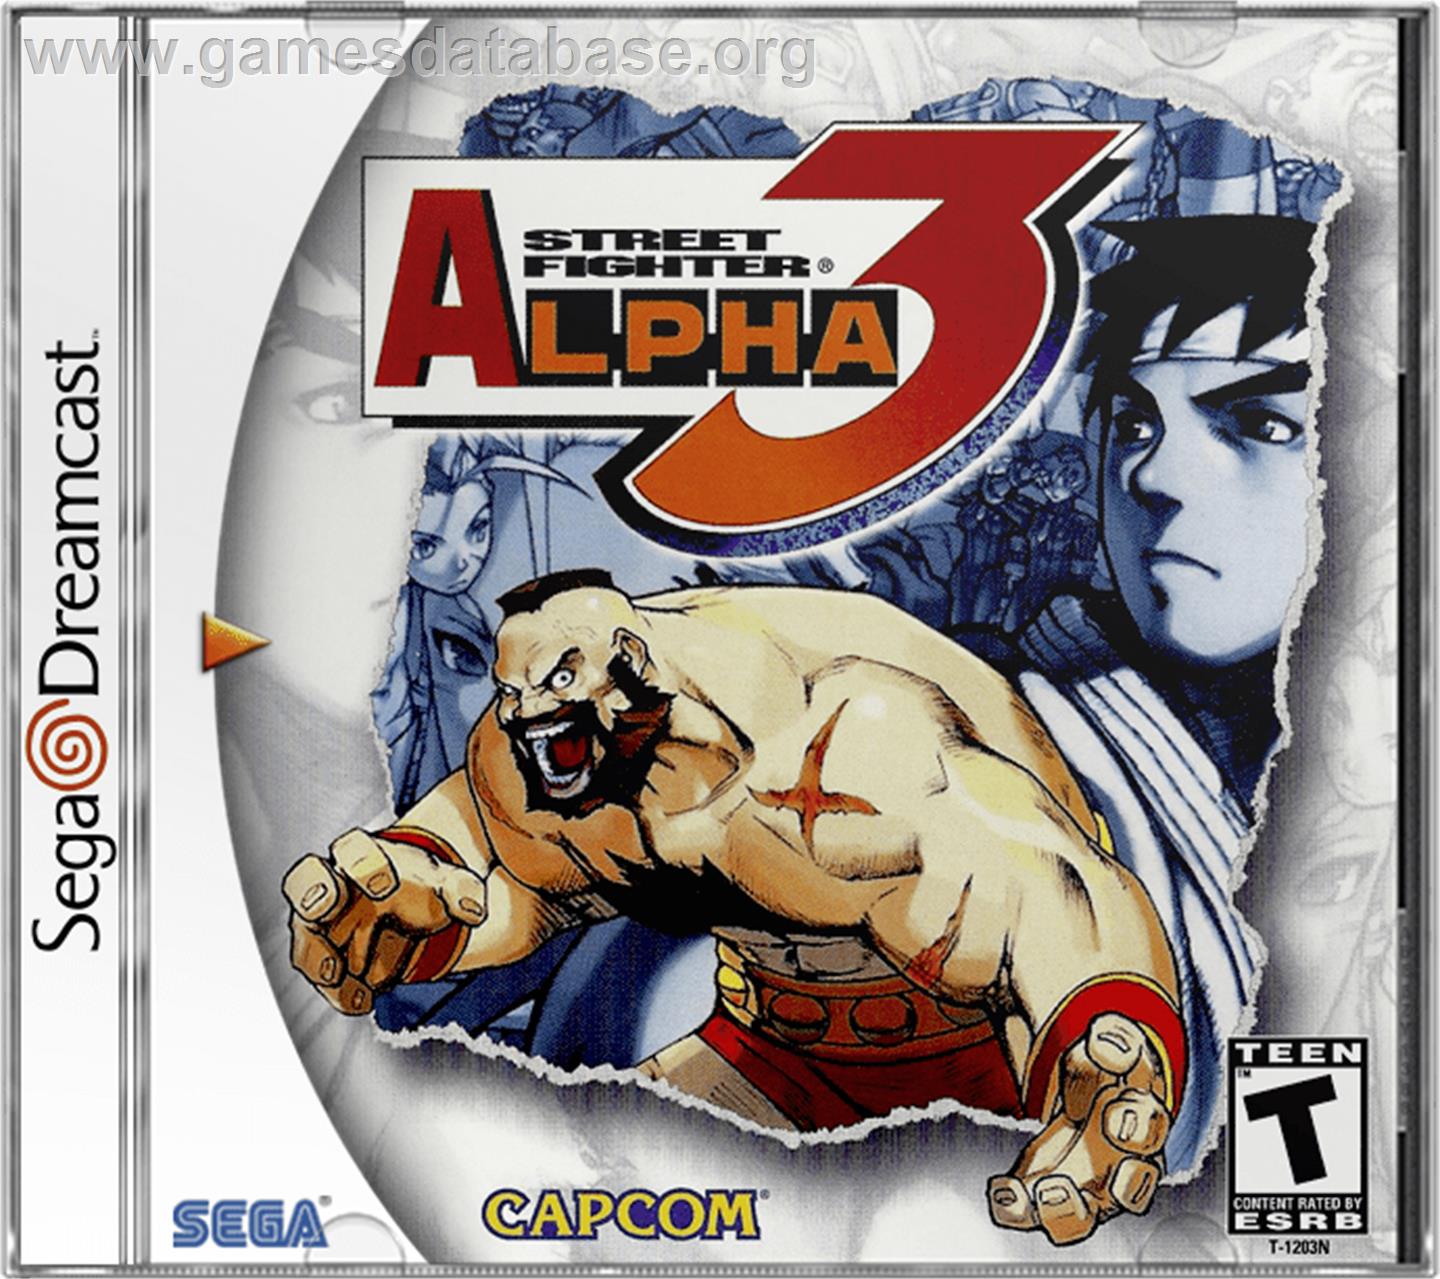 Street Fighter Alpha 3 - Sega Dreamcast - Artwork - Box